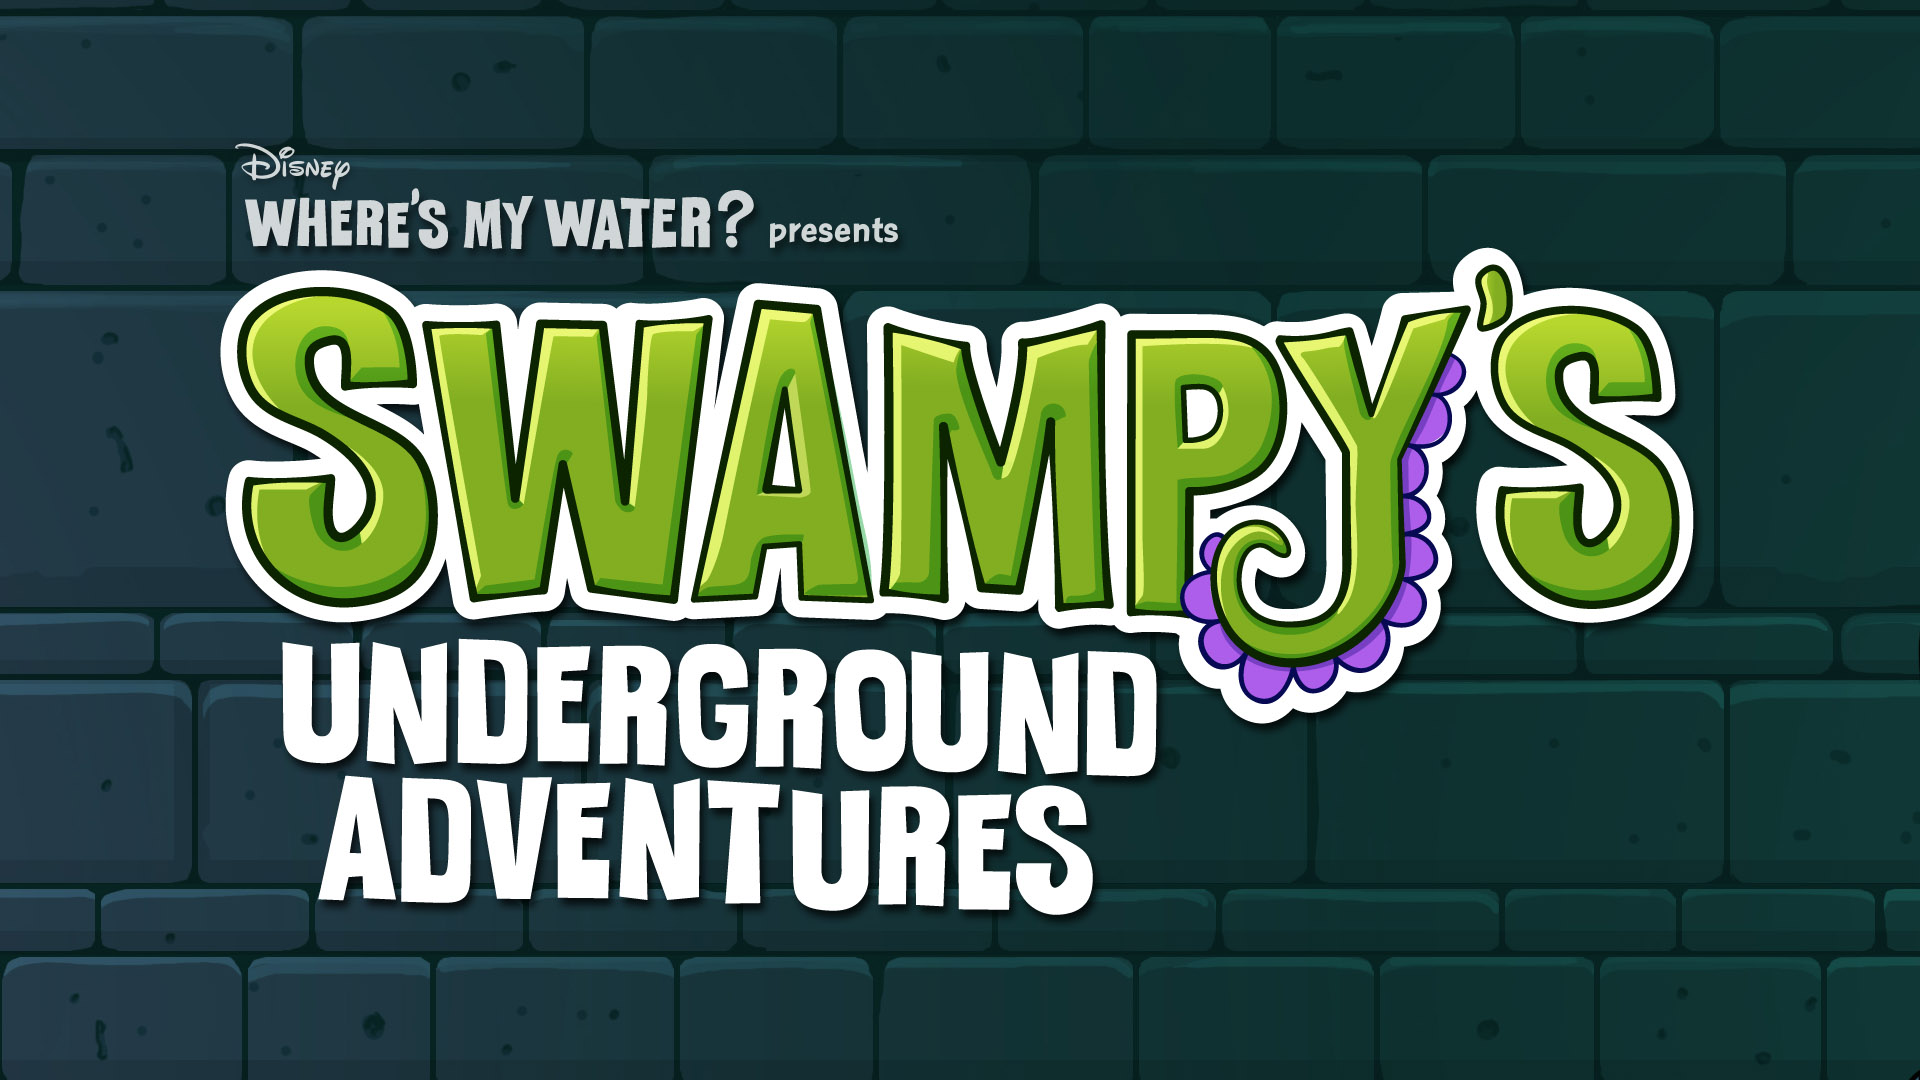 Celebrate the Launch of ‘Swampy’s Underground Adventures’ at Disney Store